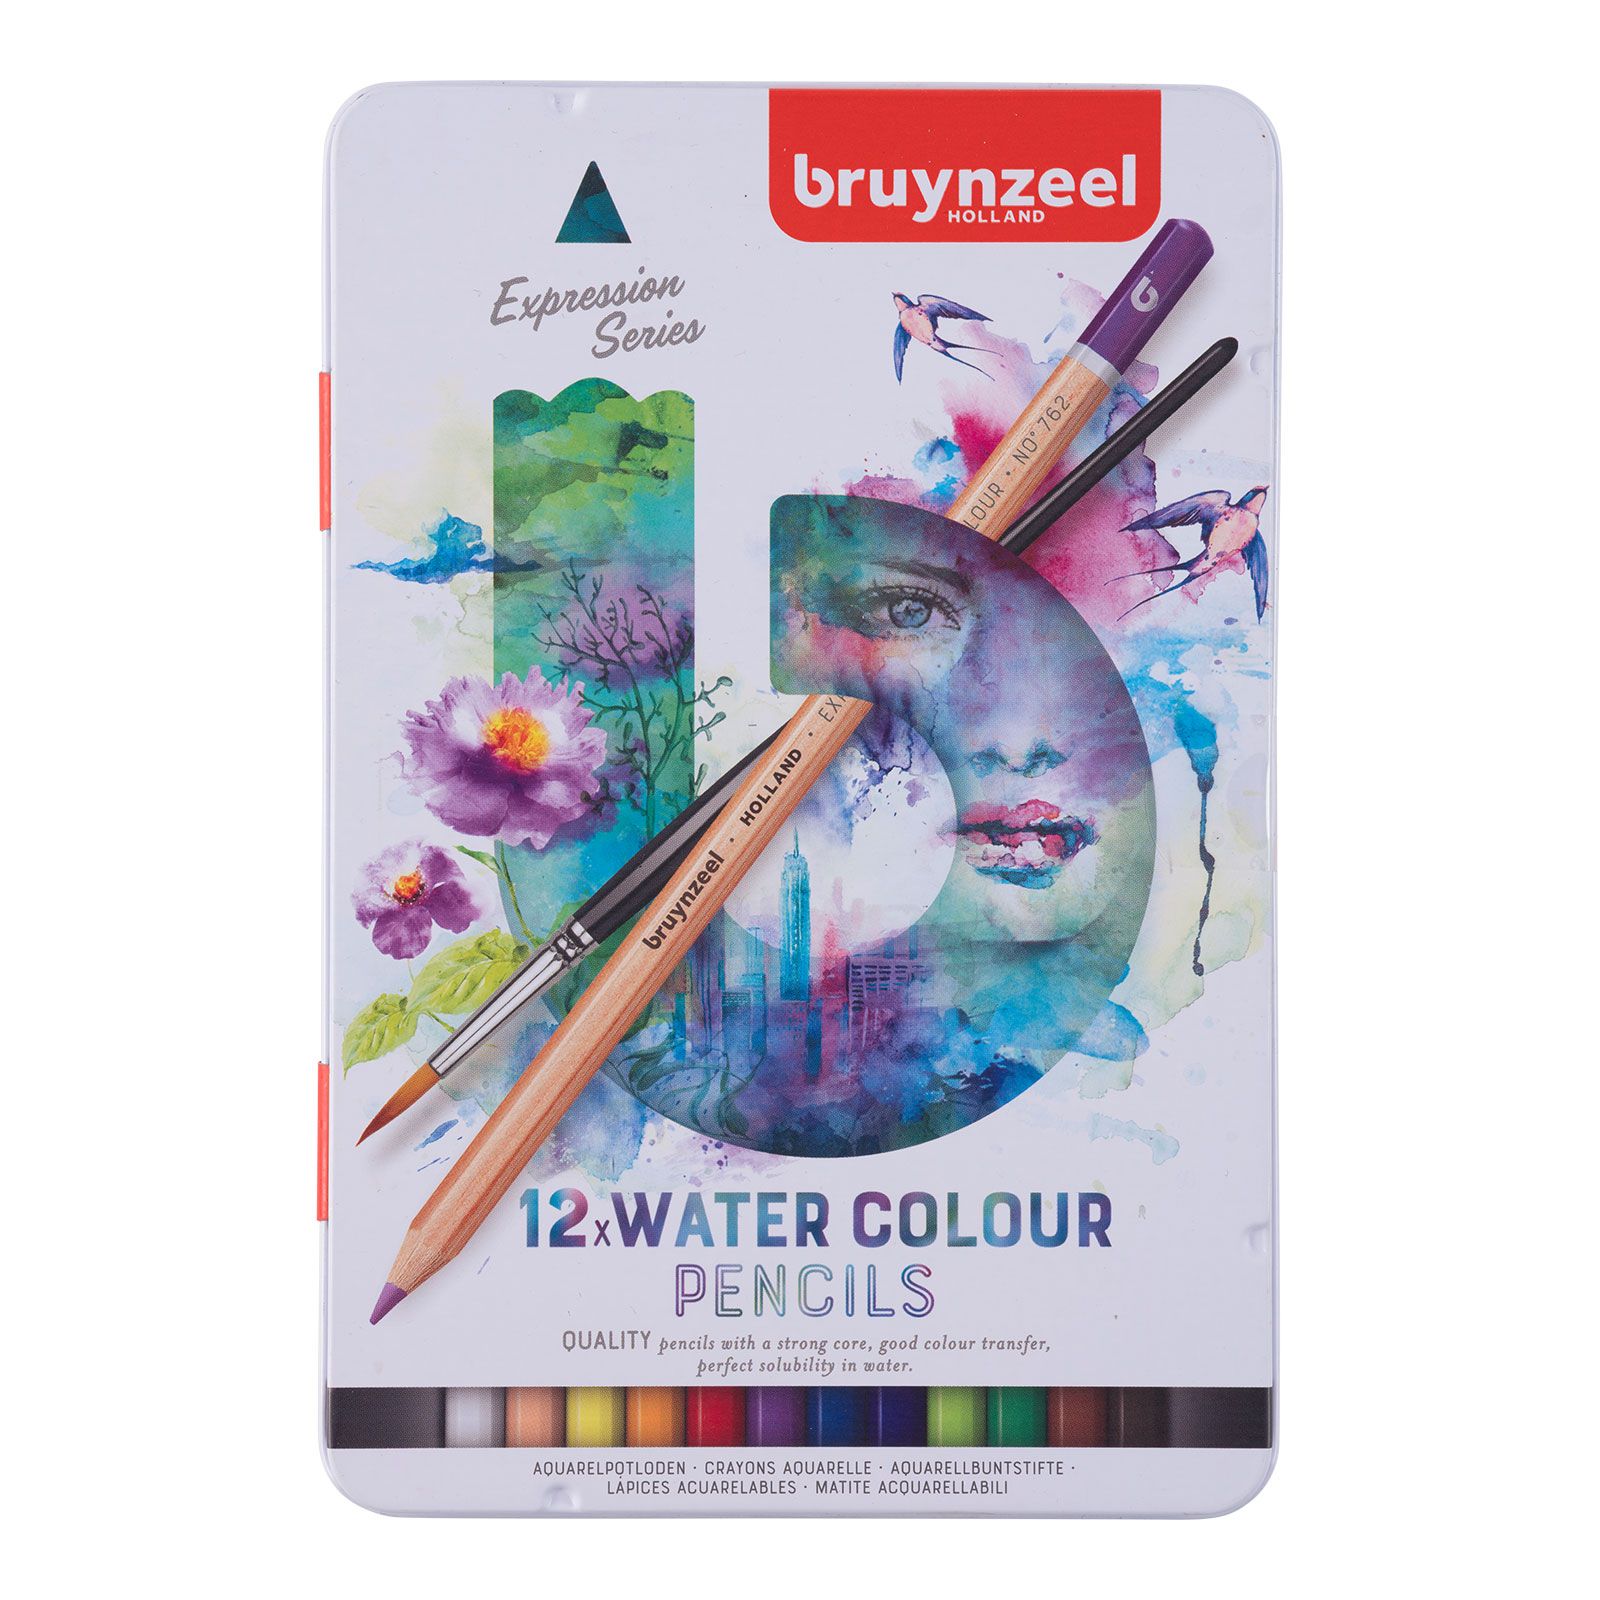 Bruynzeel • Expression matite acquerellabili Tin 12